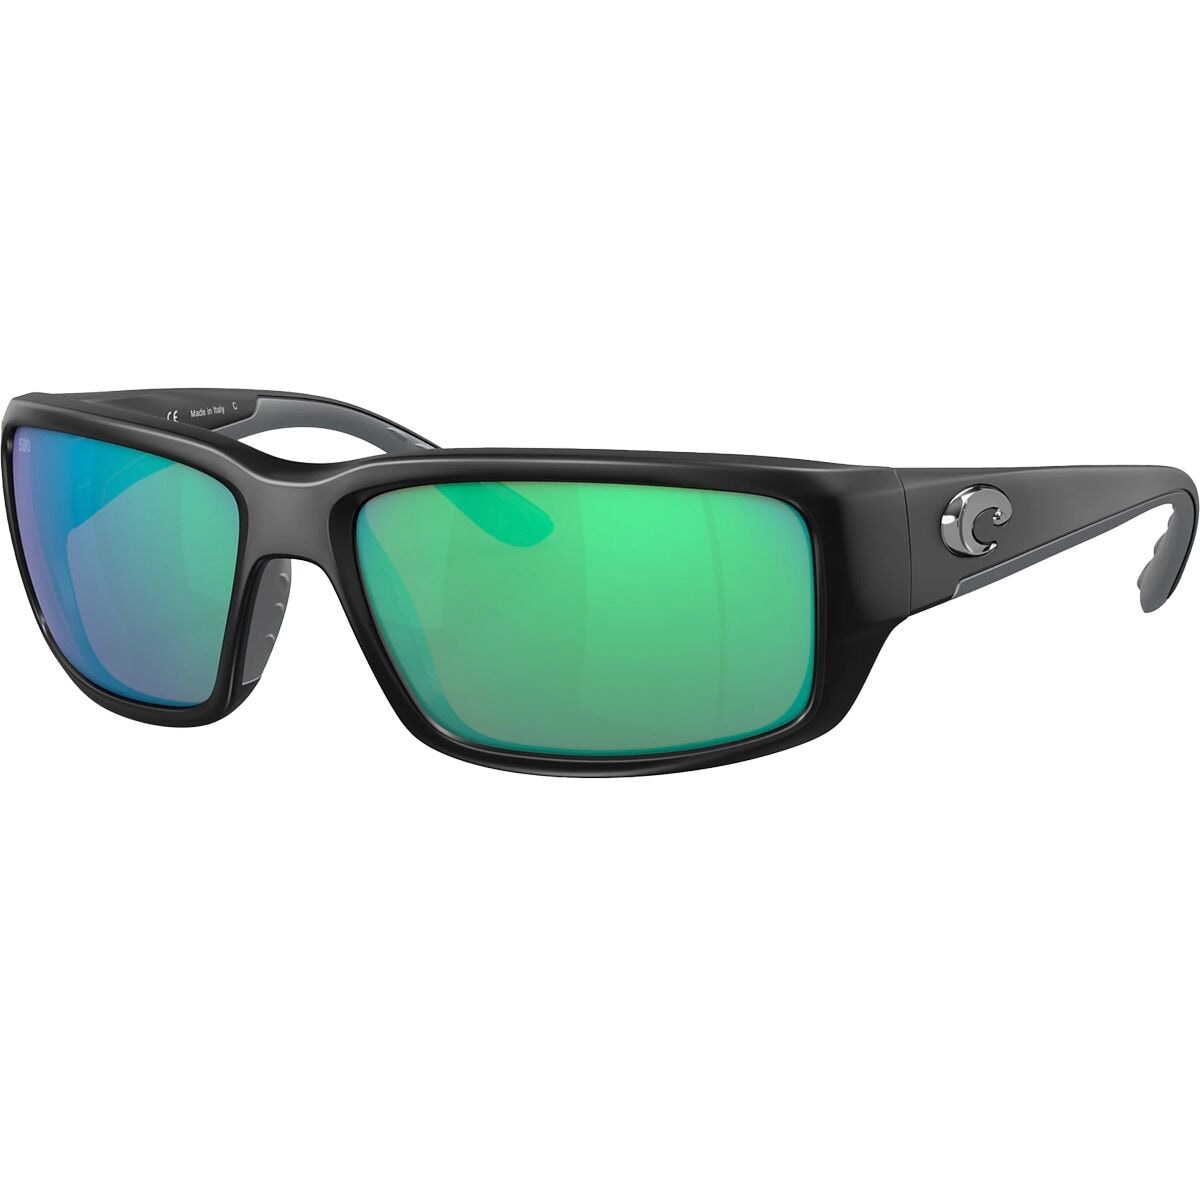 Costa Fantail 580G Polarized Sunglasses